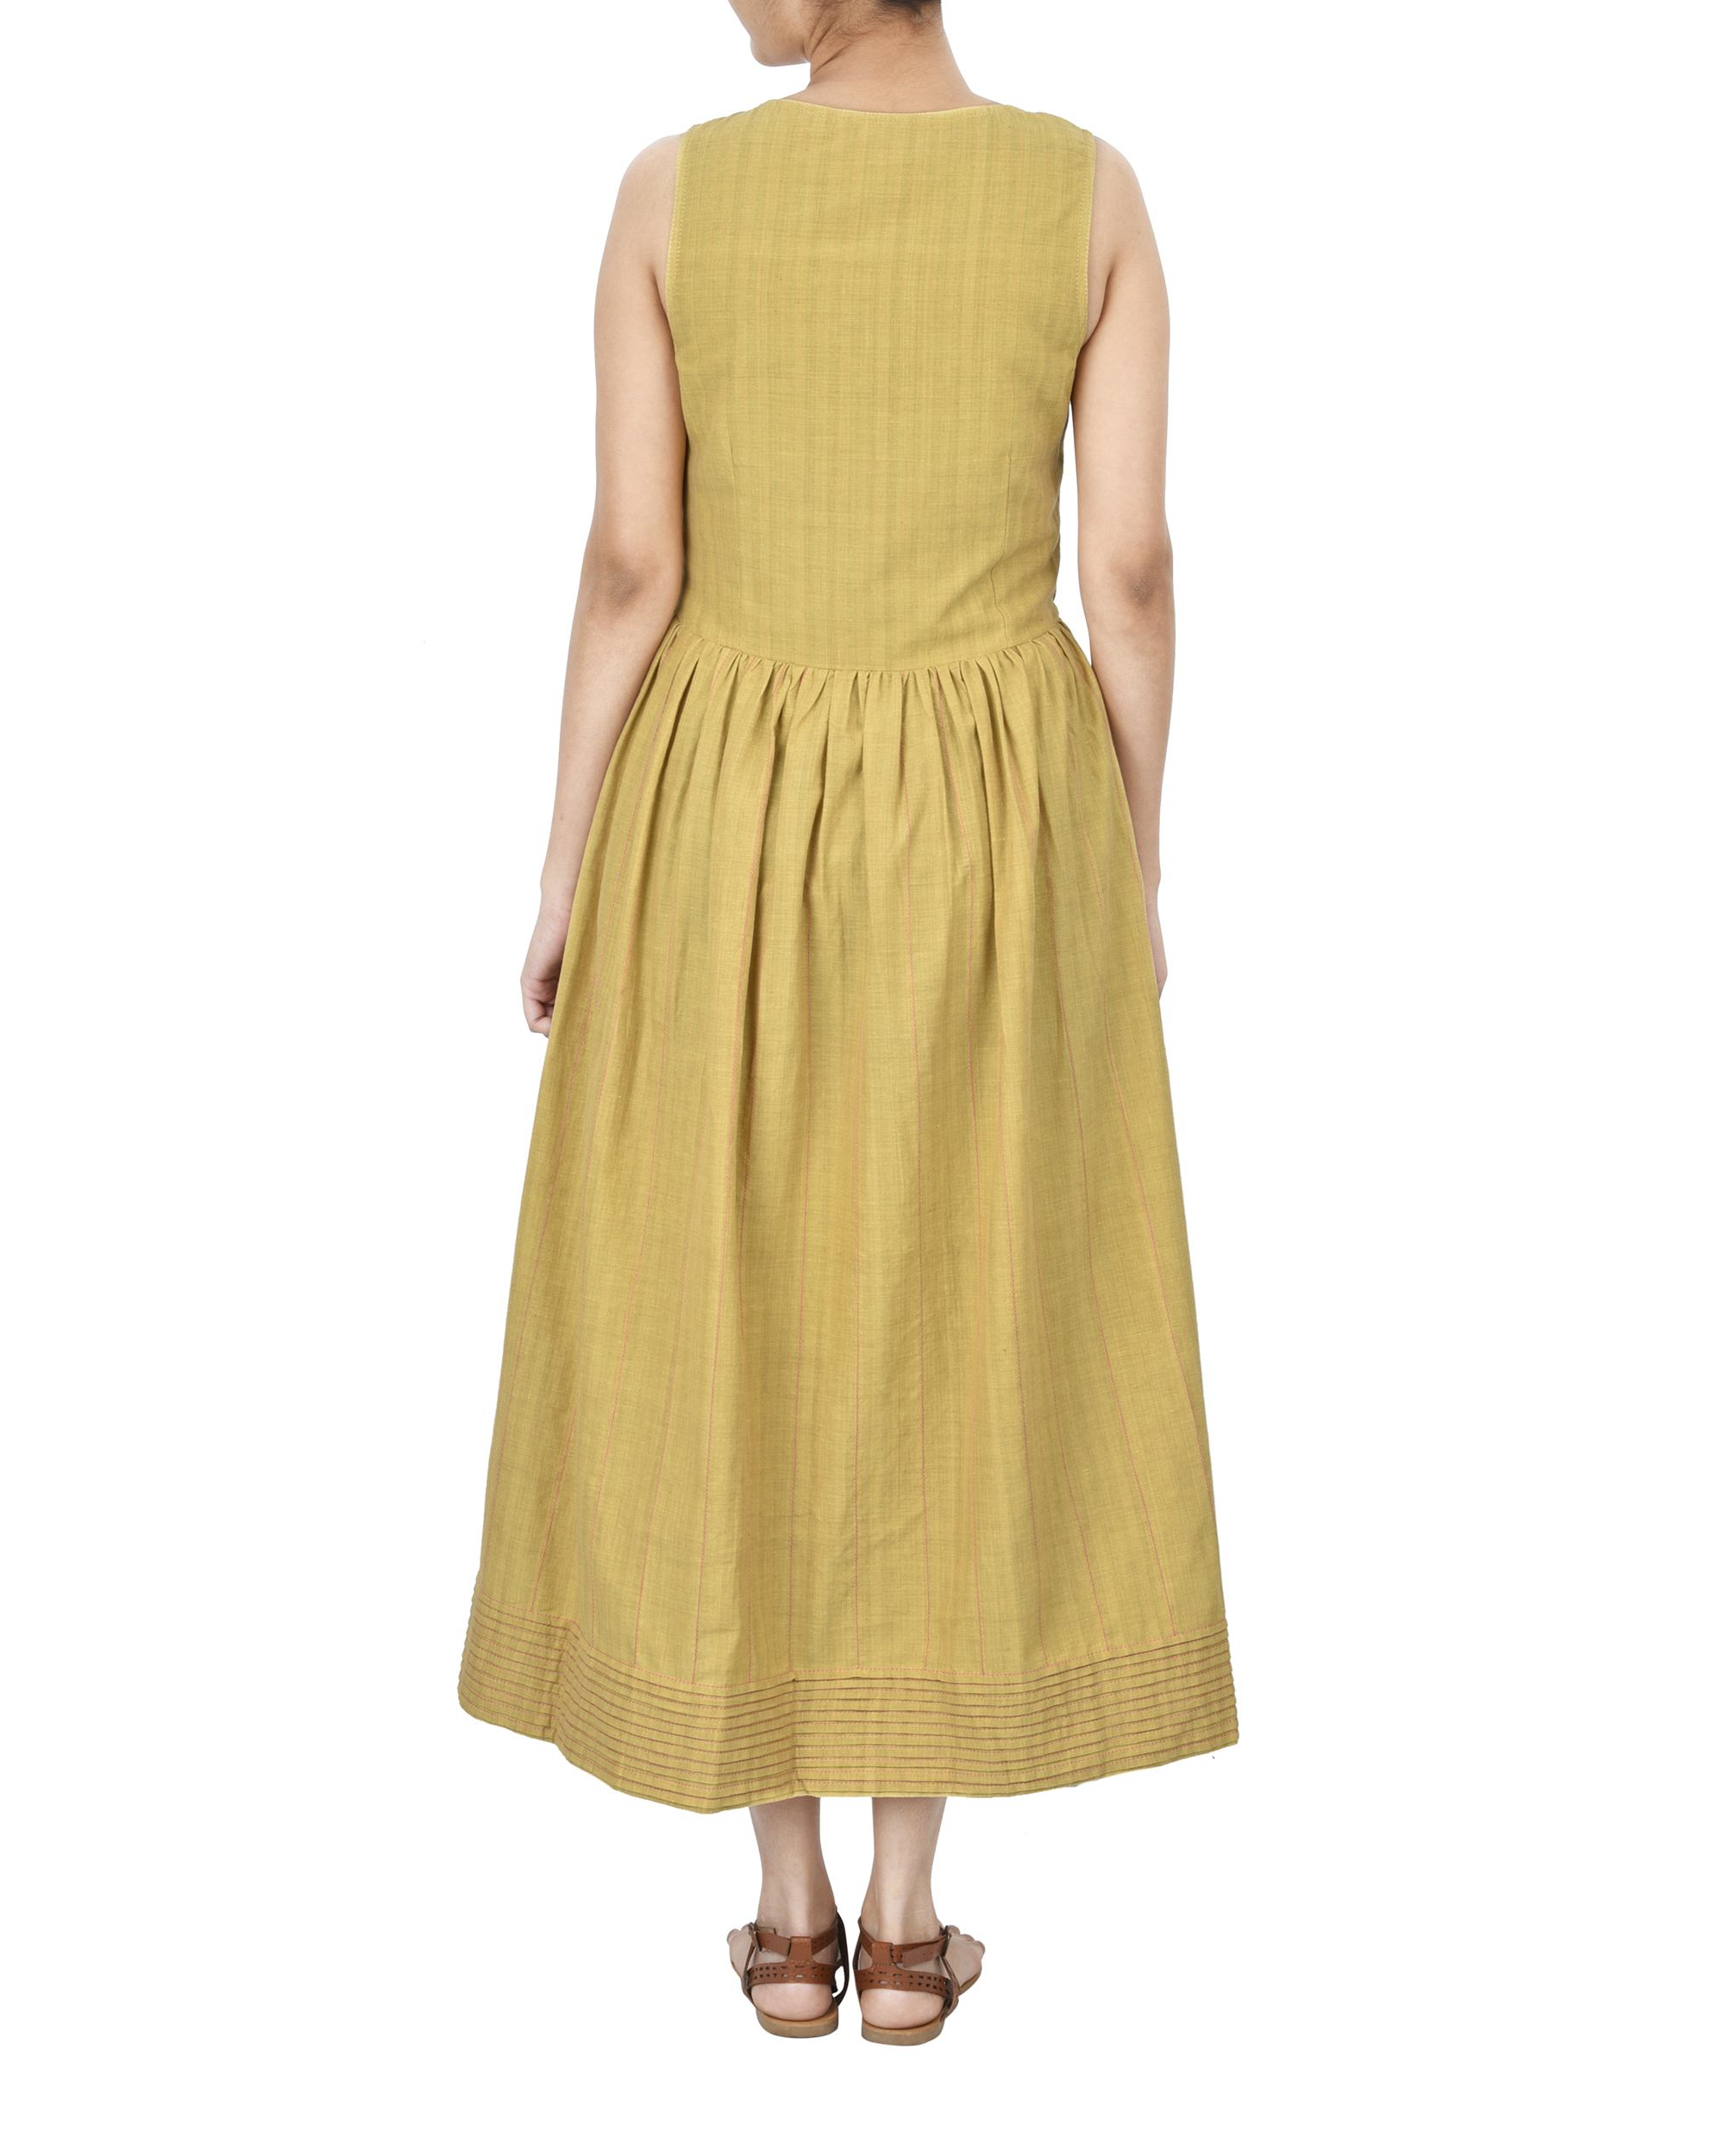 Mustard wrap dress by Naushad Ali | The Secret Label